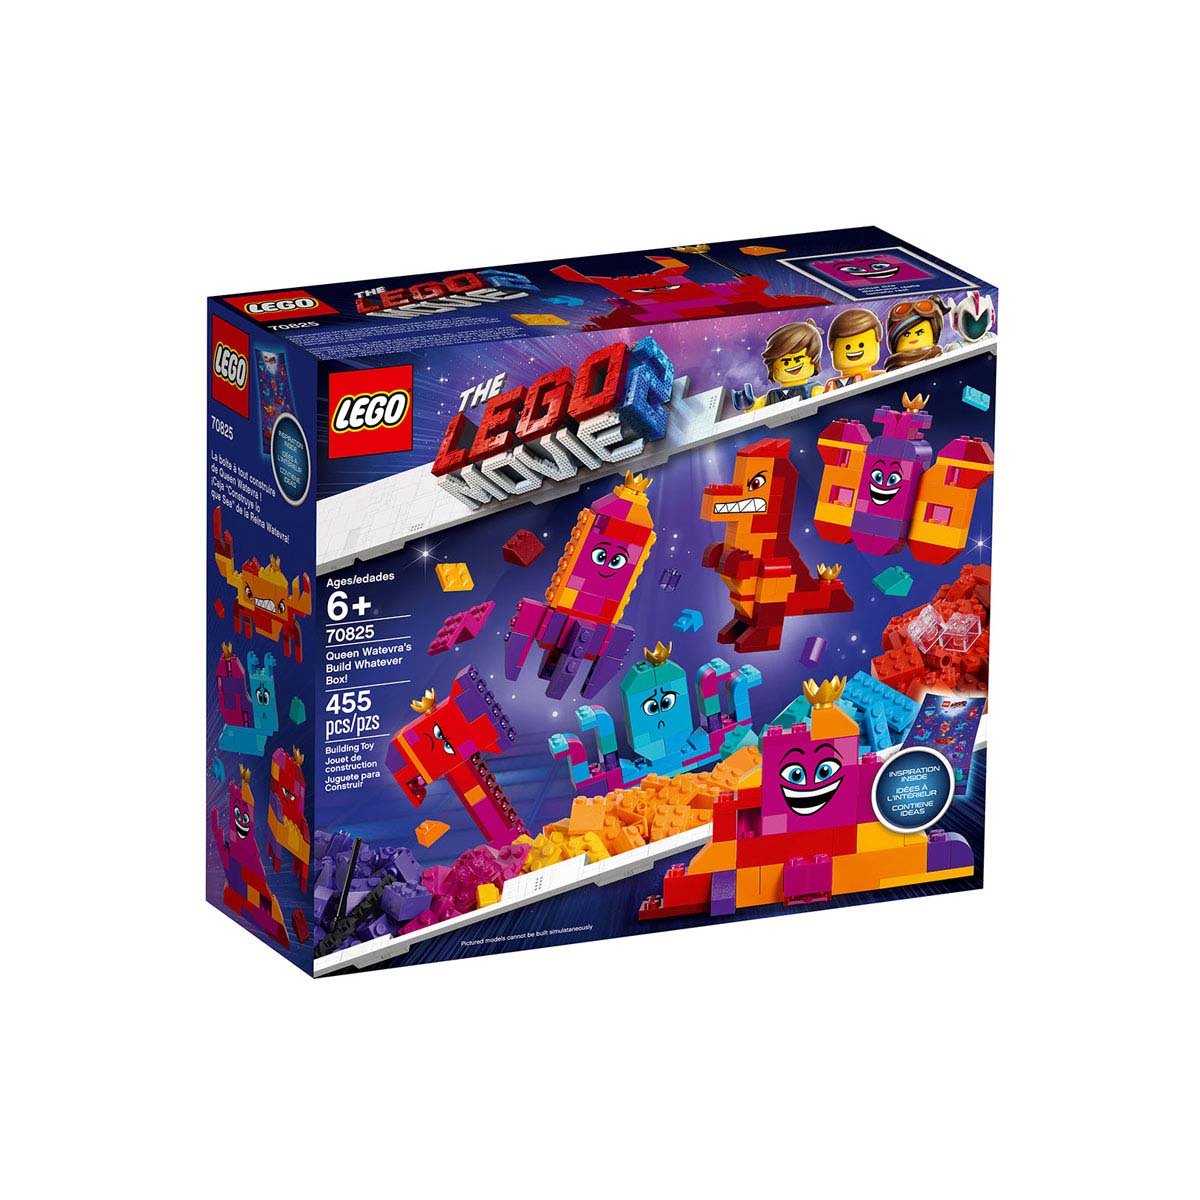 Caja Construye lo Que Sea de la Reina Quesea Qu'nabi Lego